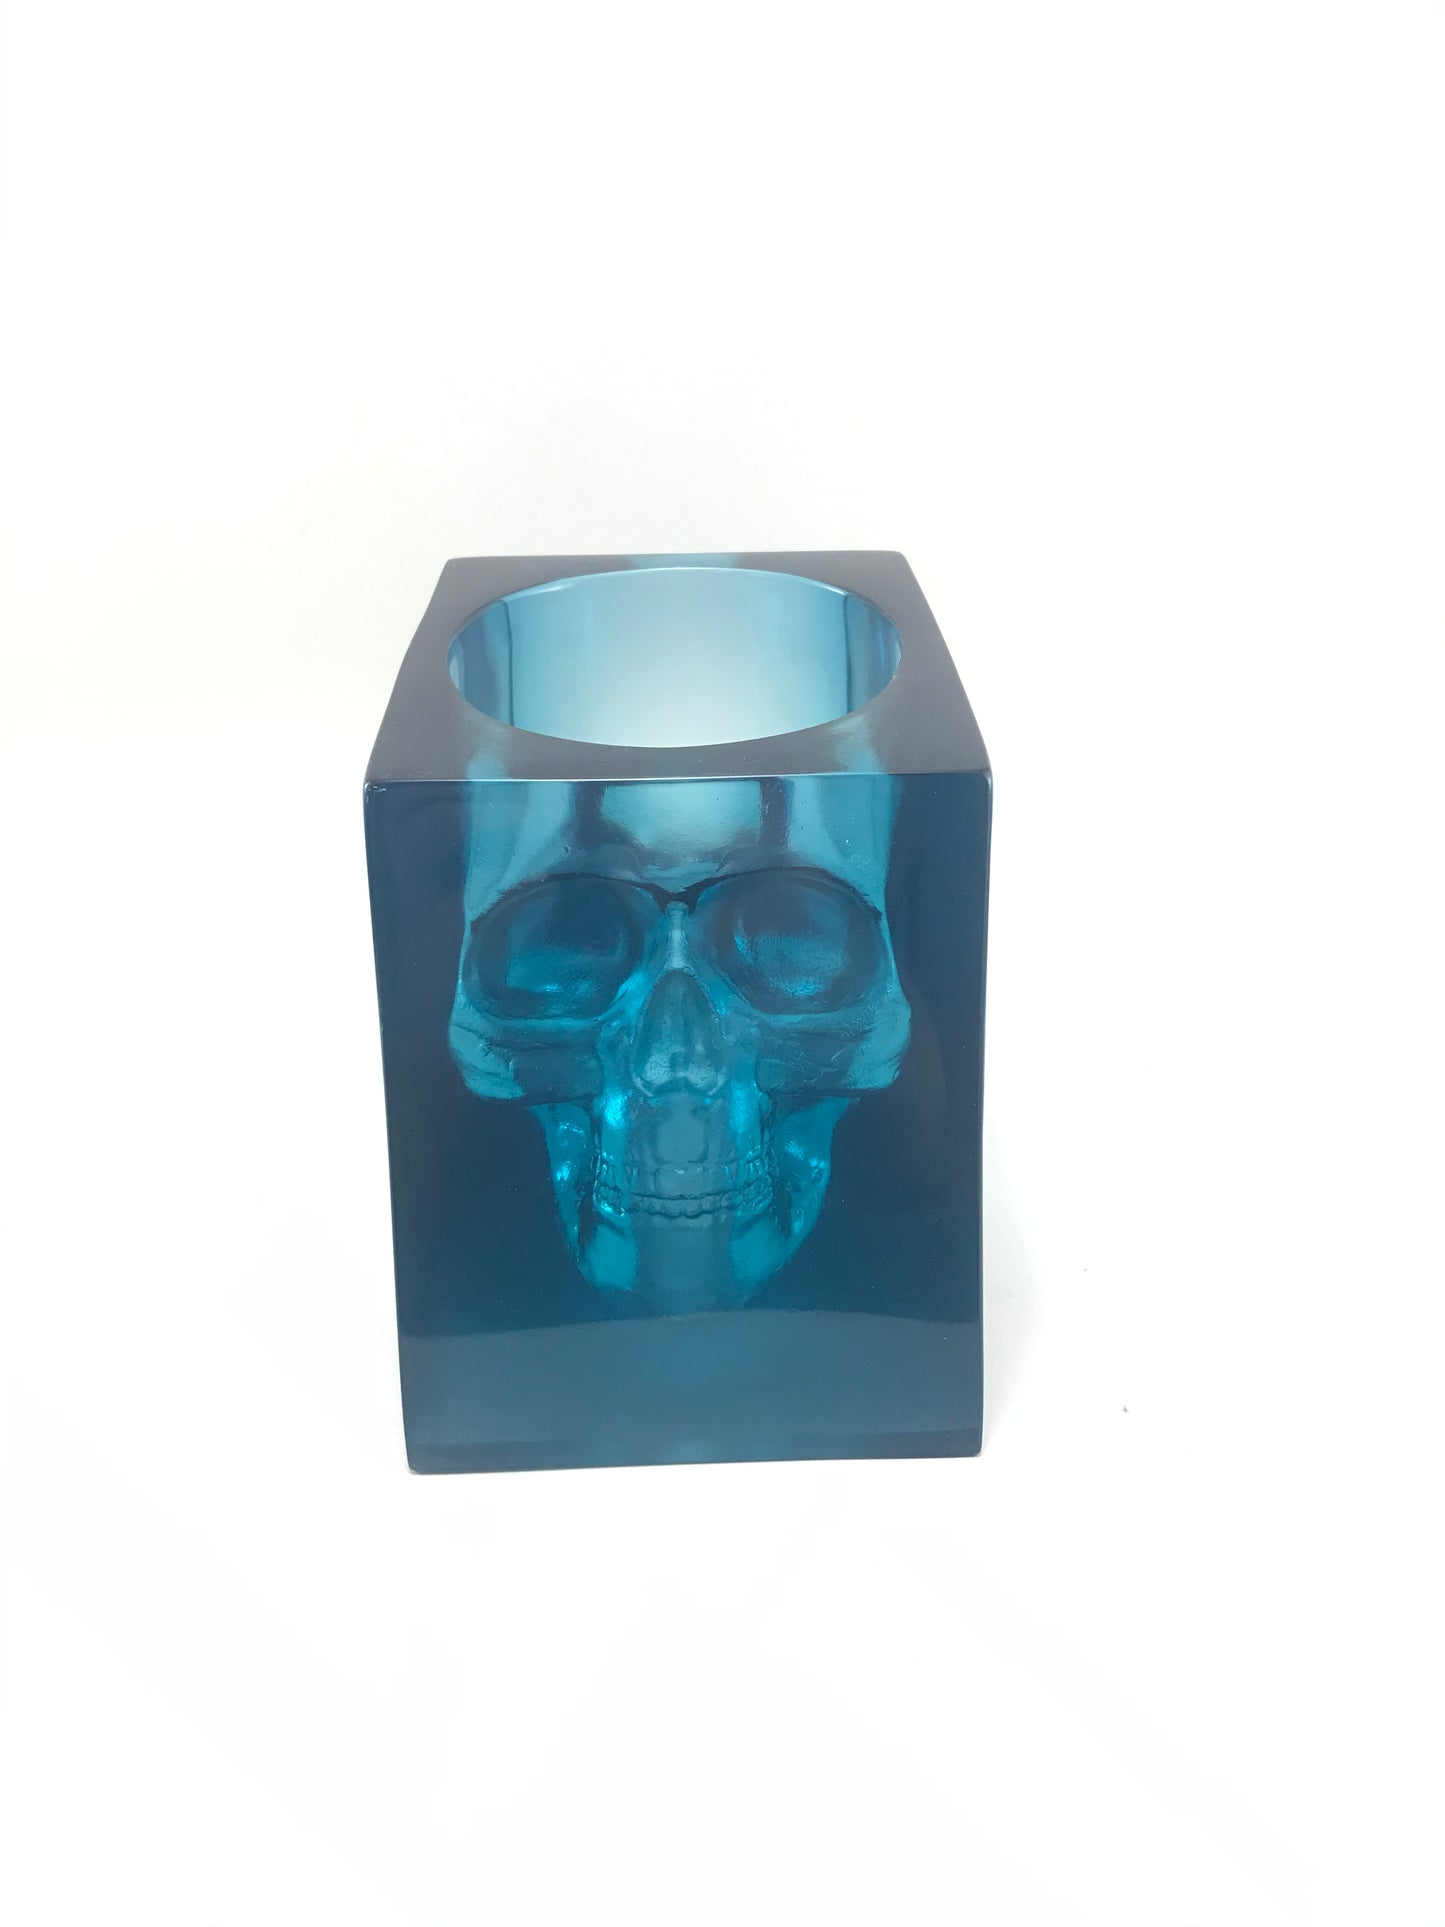 Skull Tealight Candle Holder Resin Figure, Modern Epoxy Home Decor